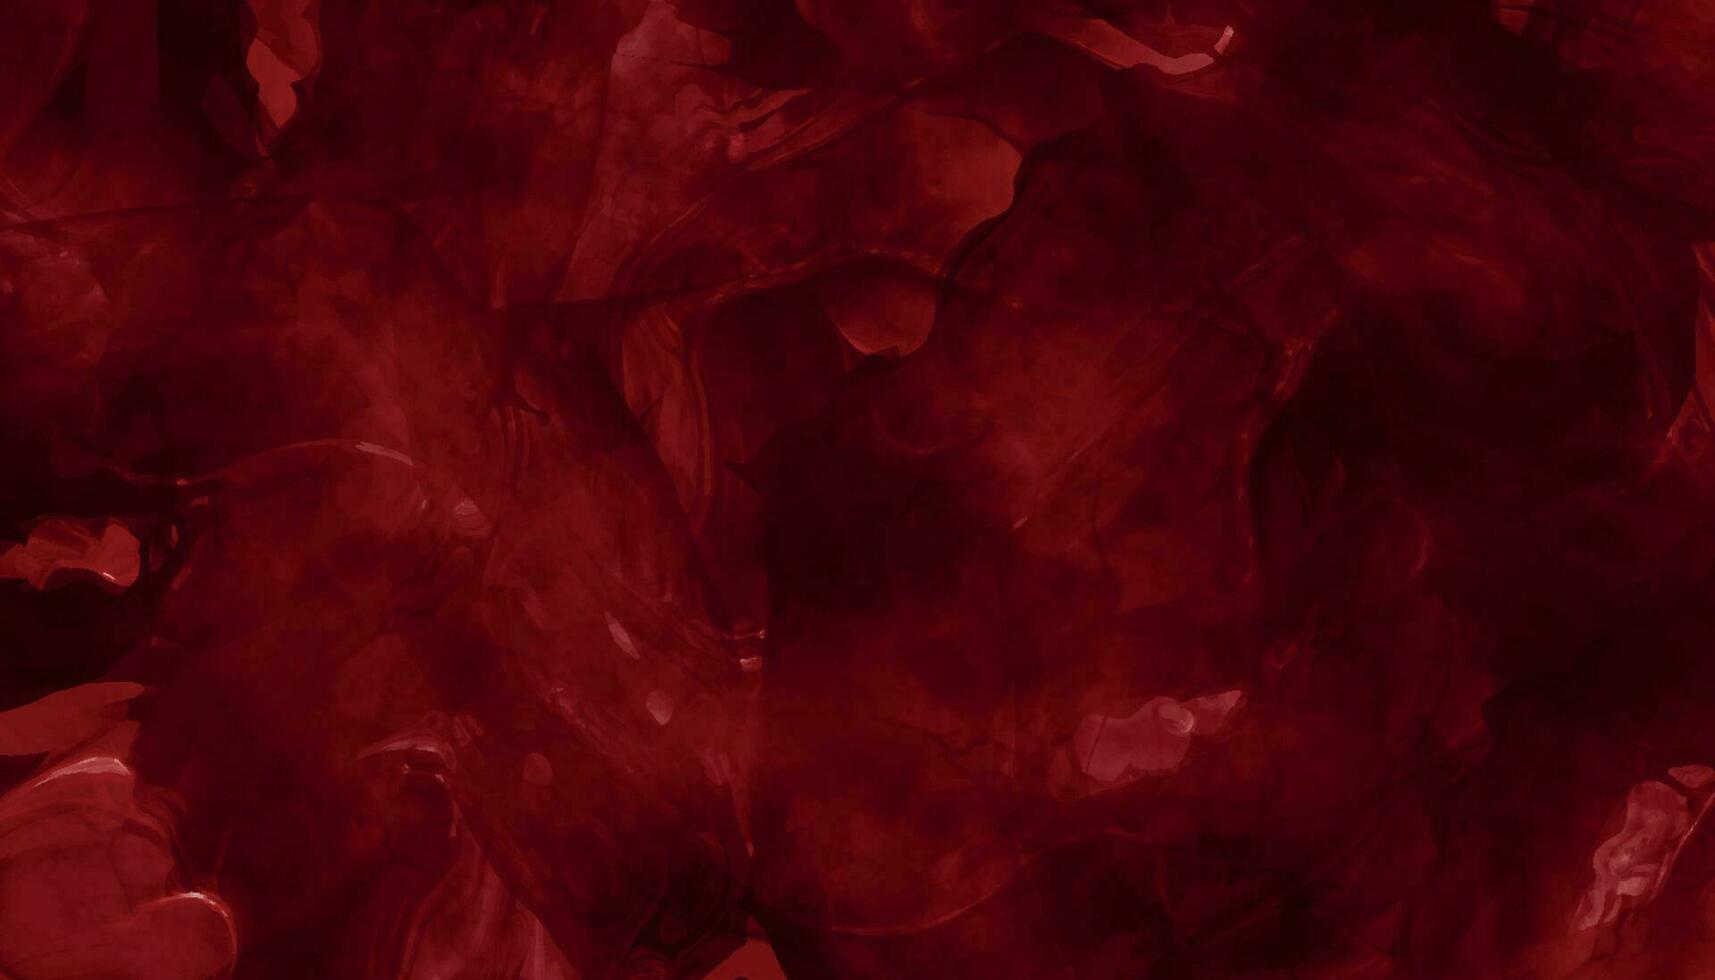 waterverf verf achtergrond. structuur van verf. rood grunge gekrast textuur. rood waterverf achtergrond vector